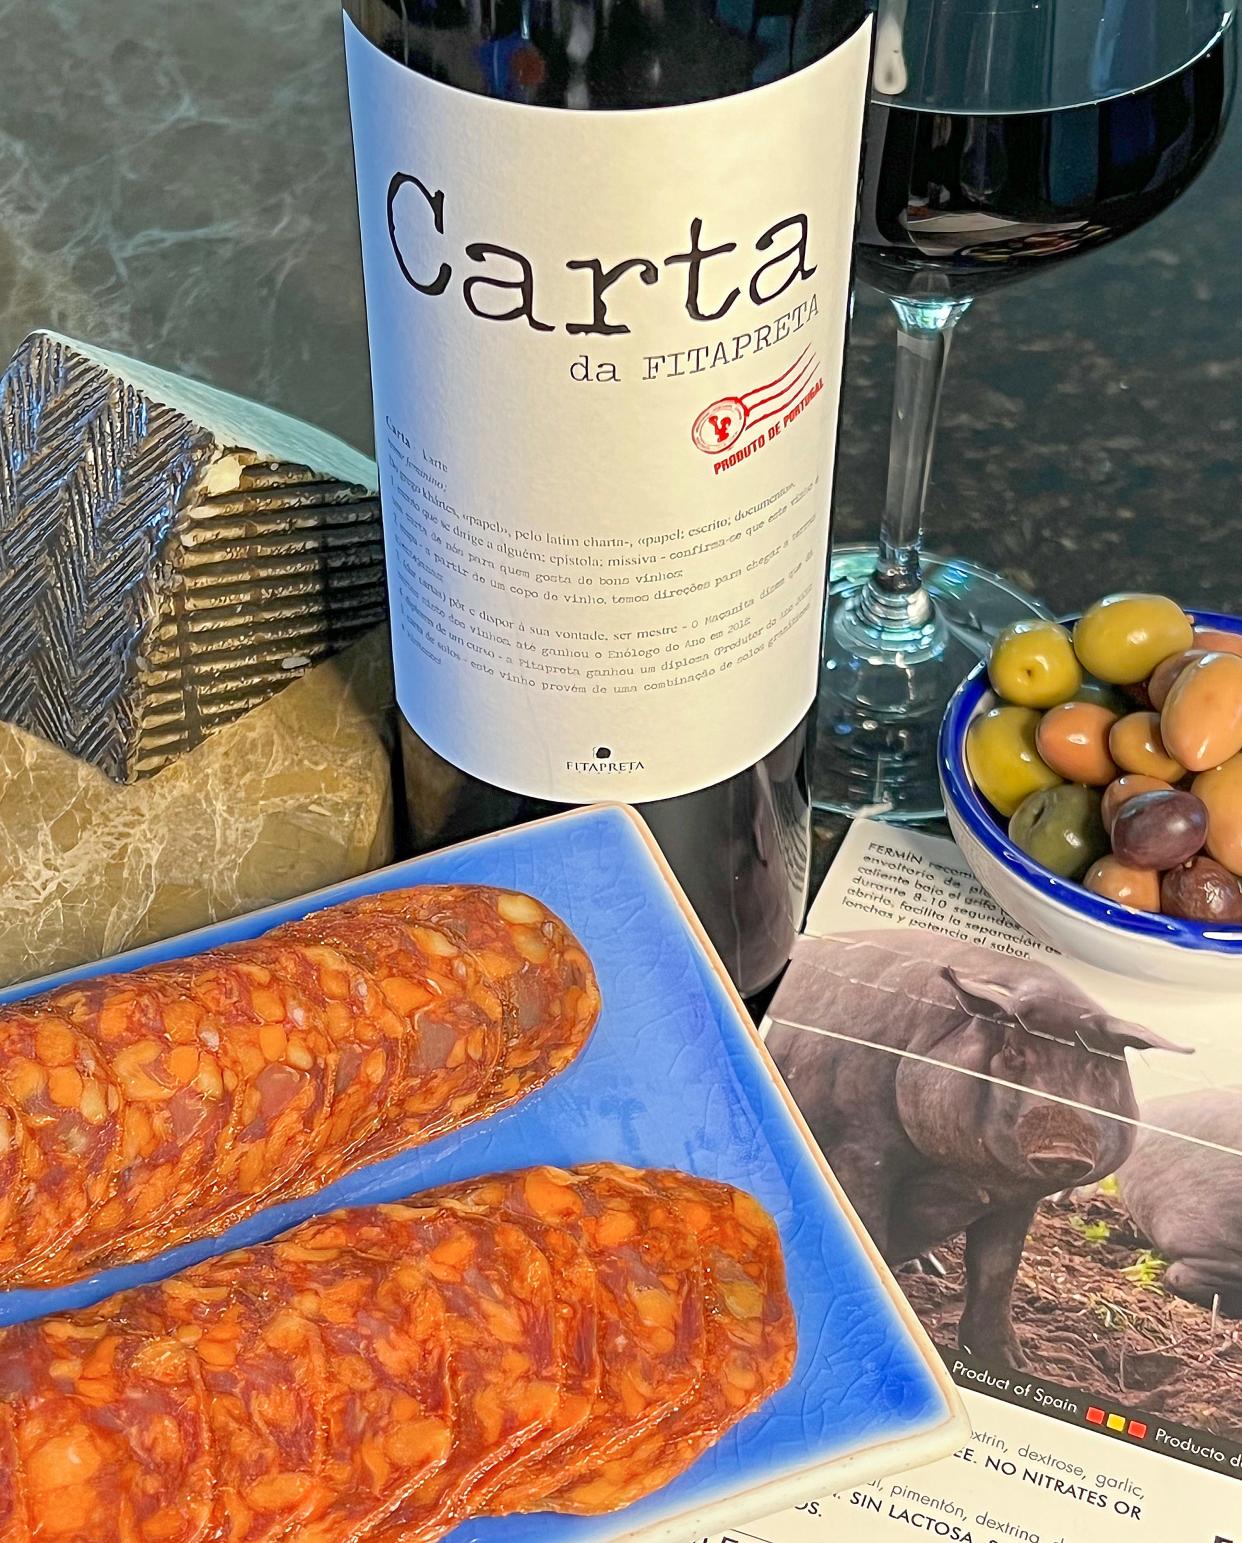 A glass of Portuguese red blend Carta da Fitapreta pairs nicely with Fermin iberico chorizo.